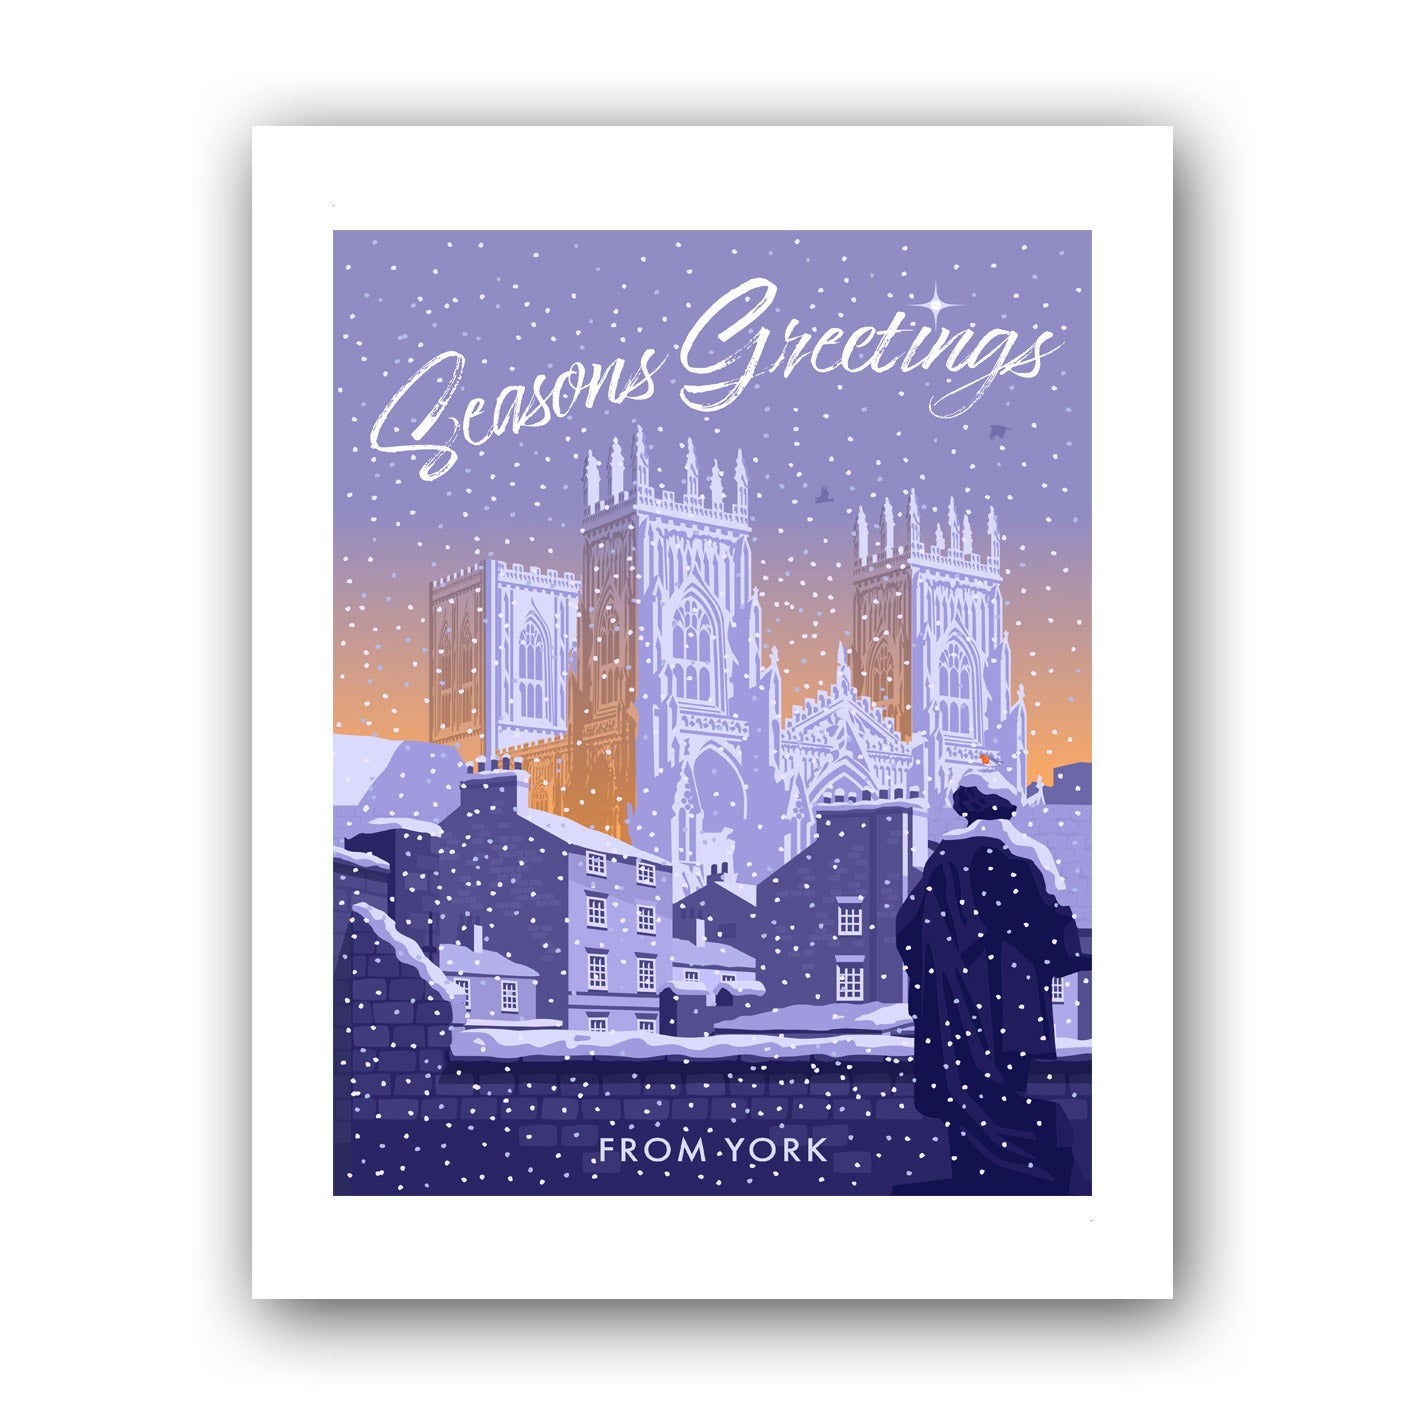 Seasons Greetings from York Art Print